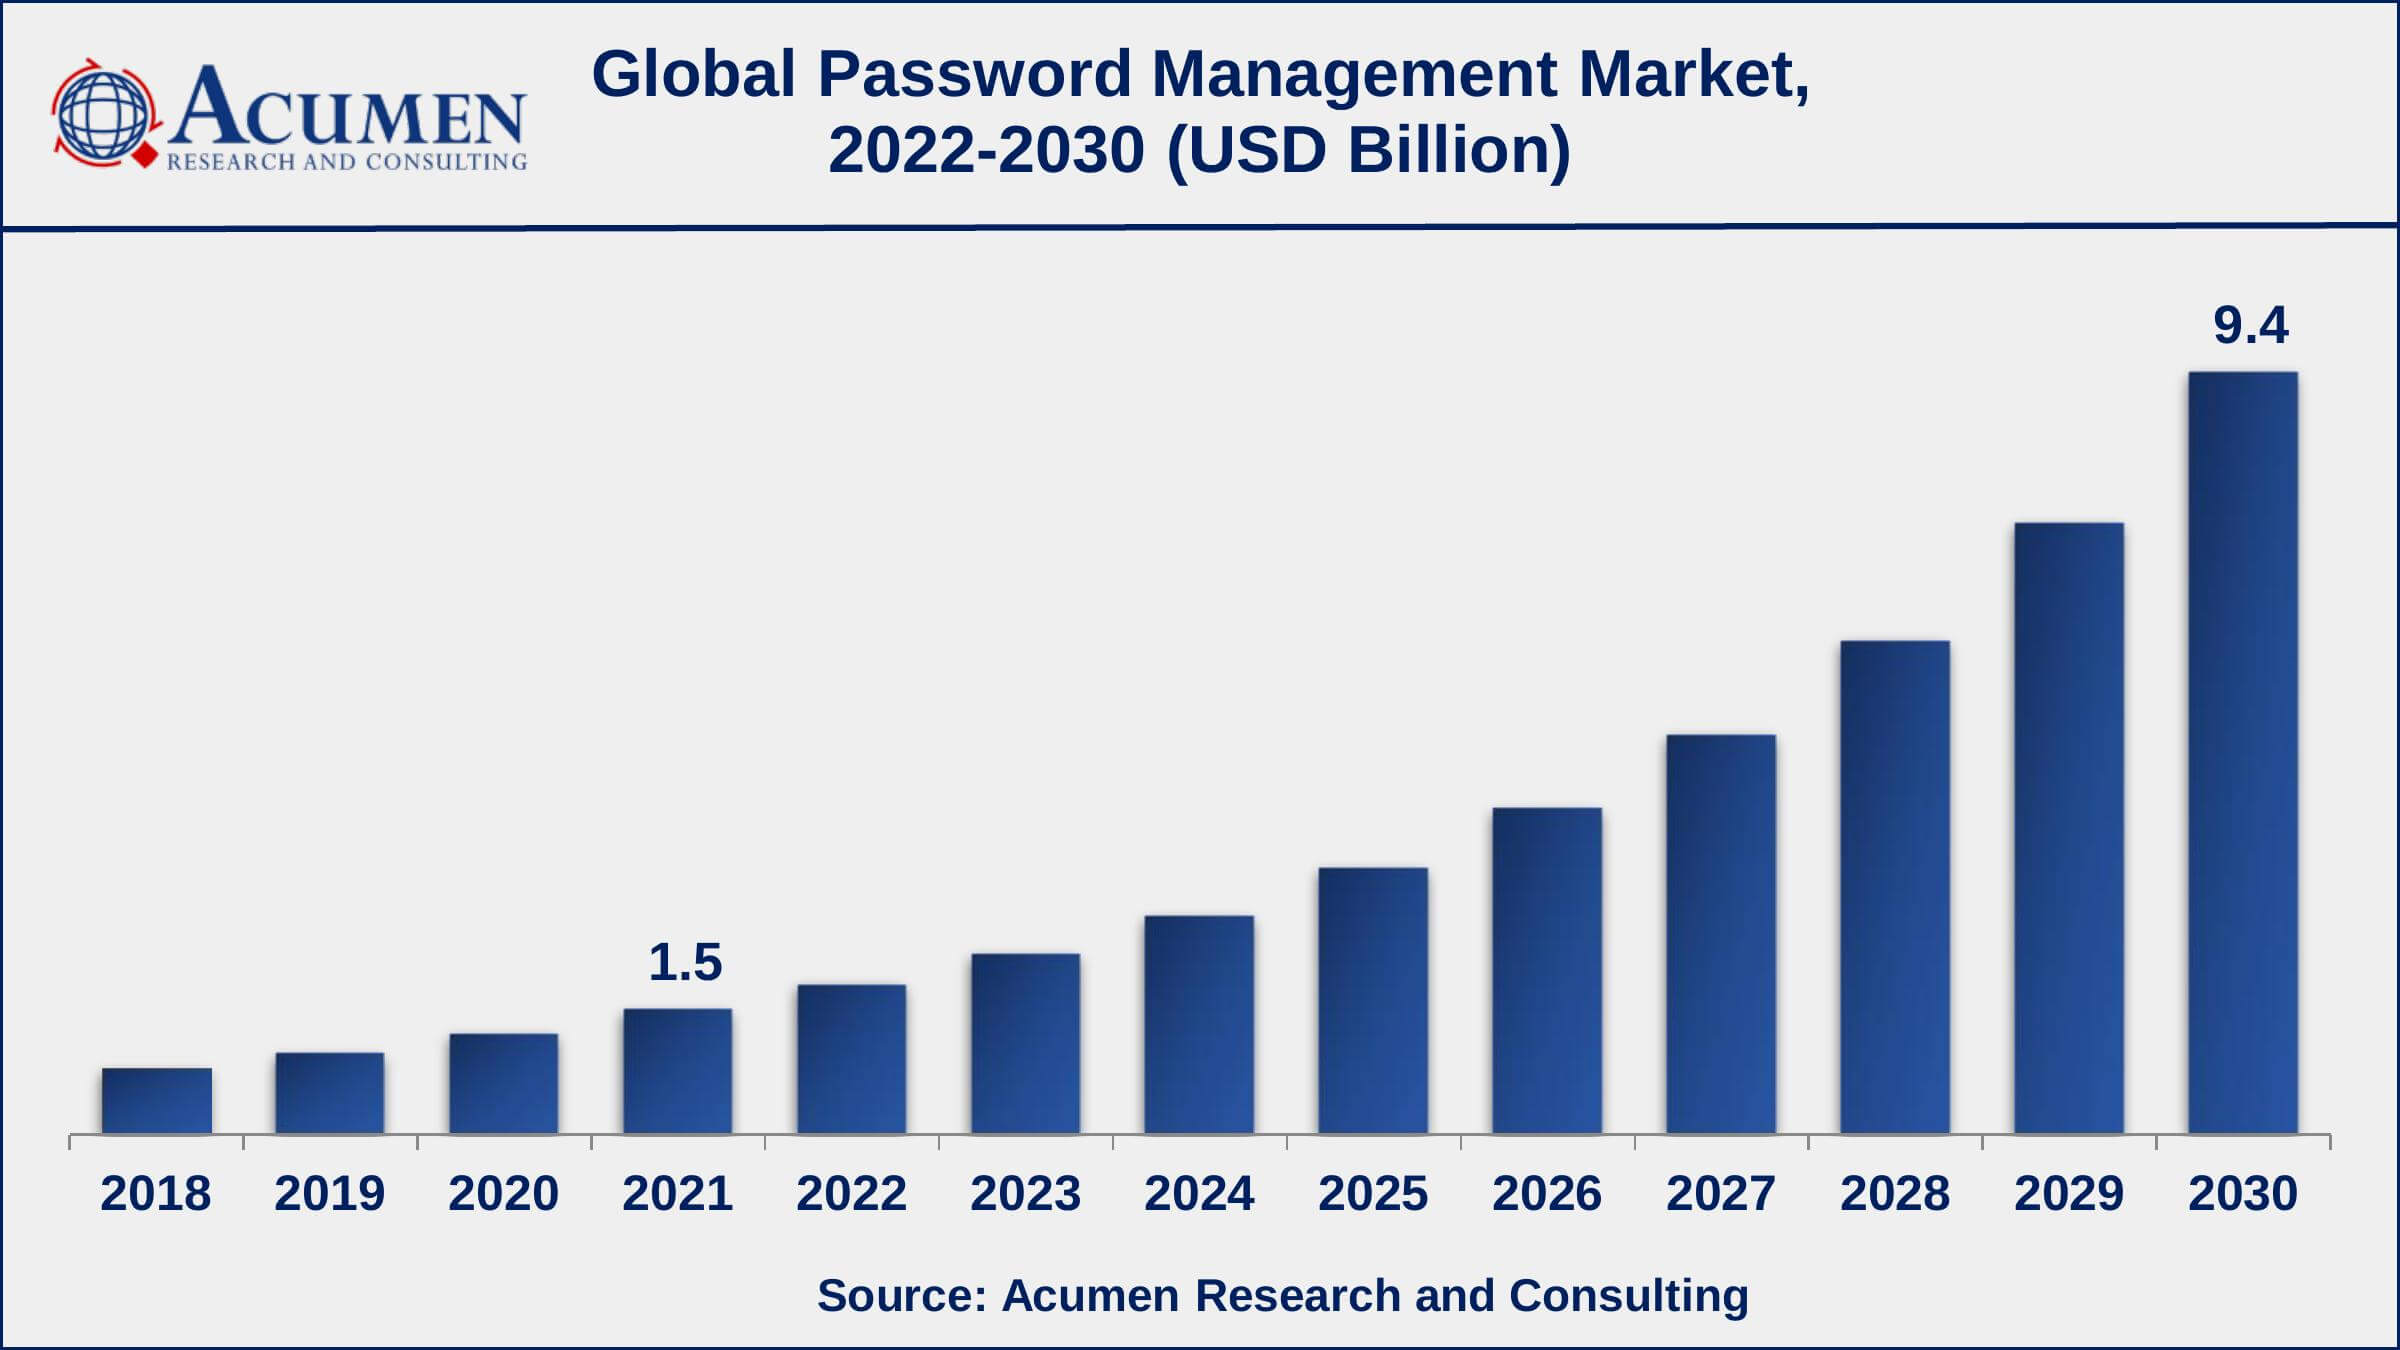 Global Password Management Market Dynamics